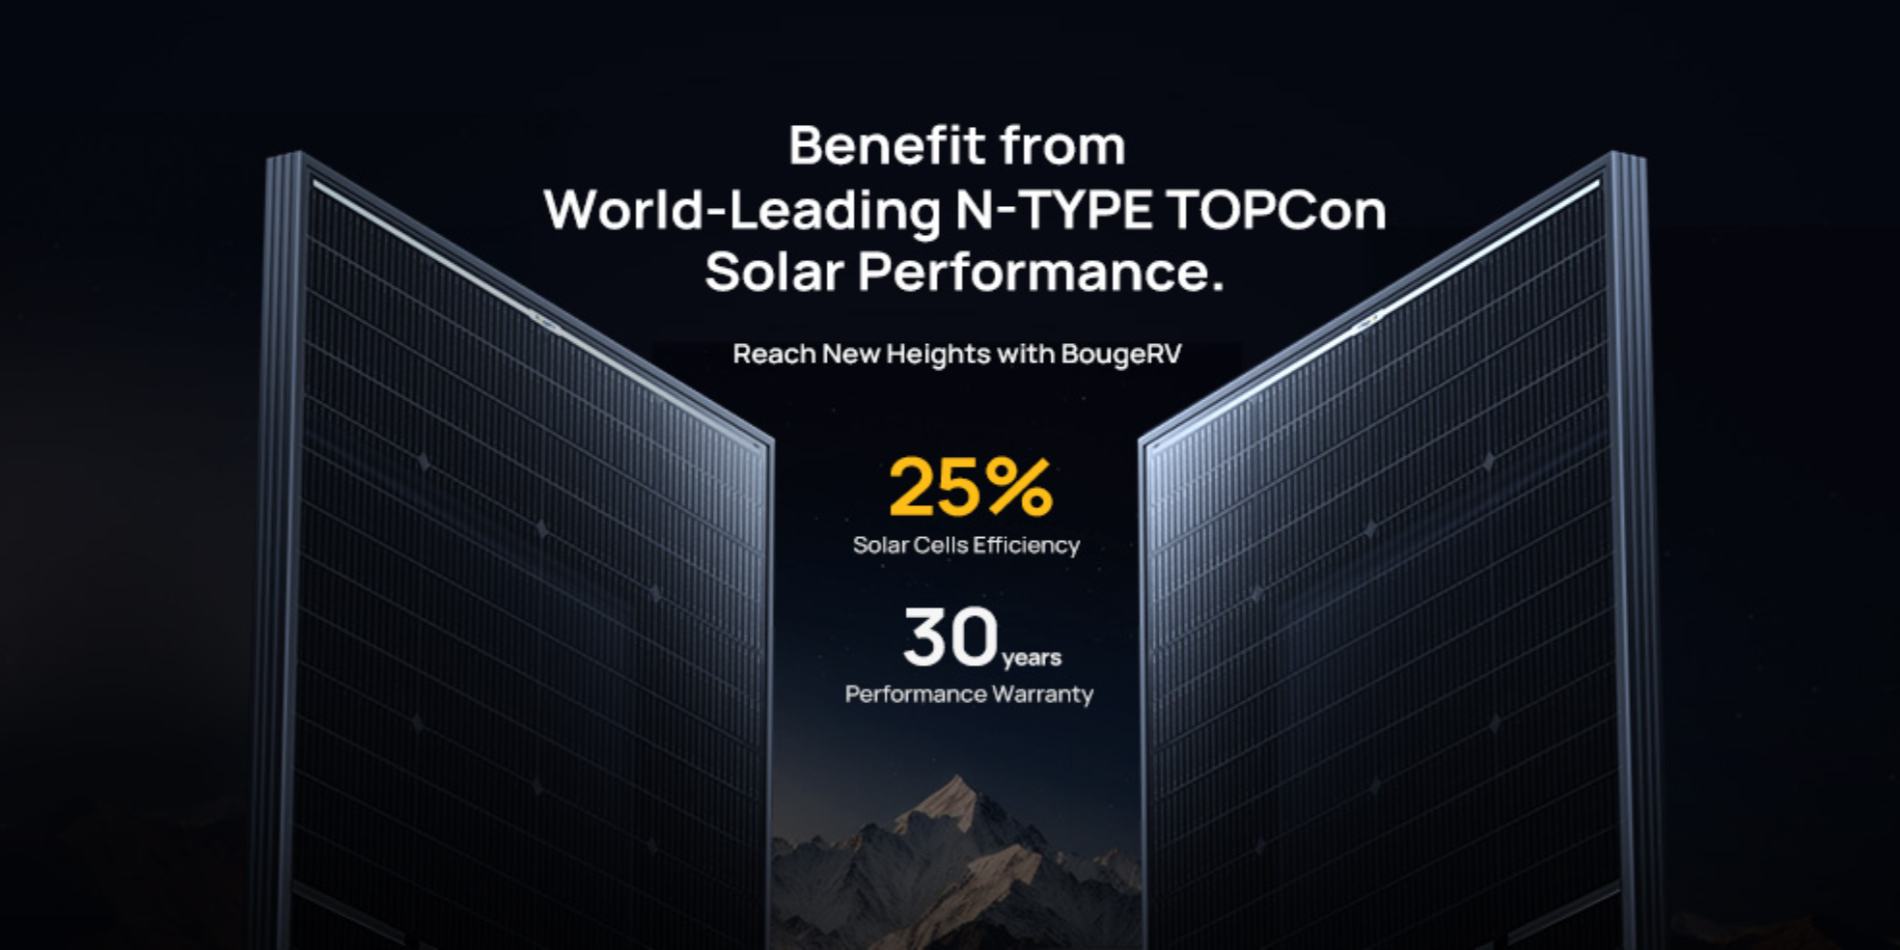 BougeRV's N-type TOPCon solar panels